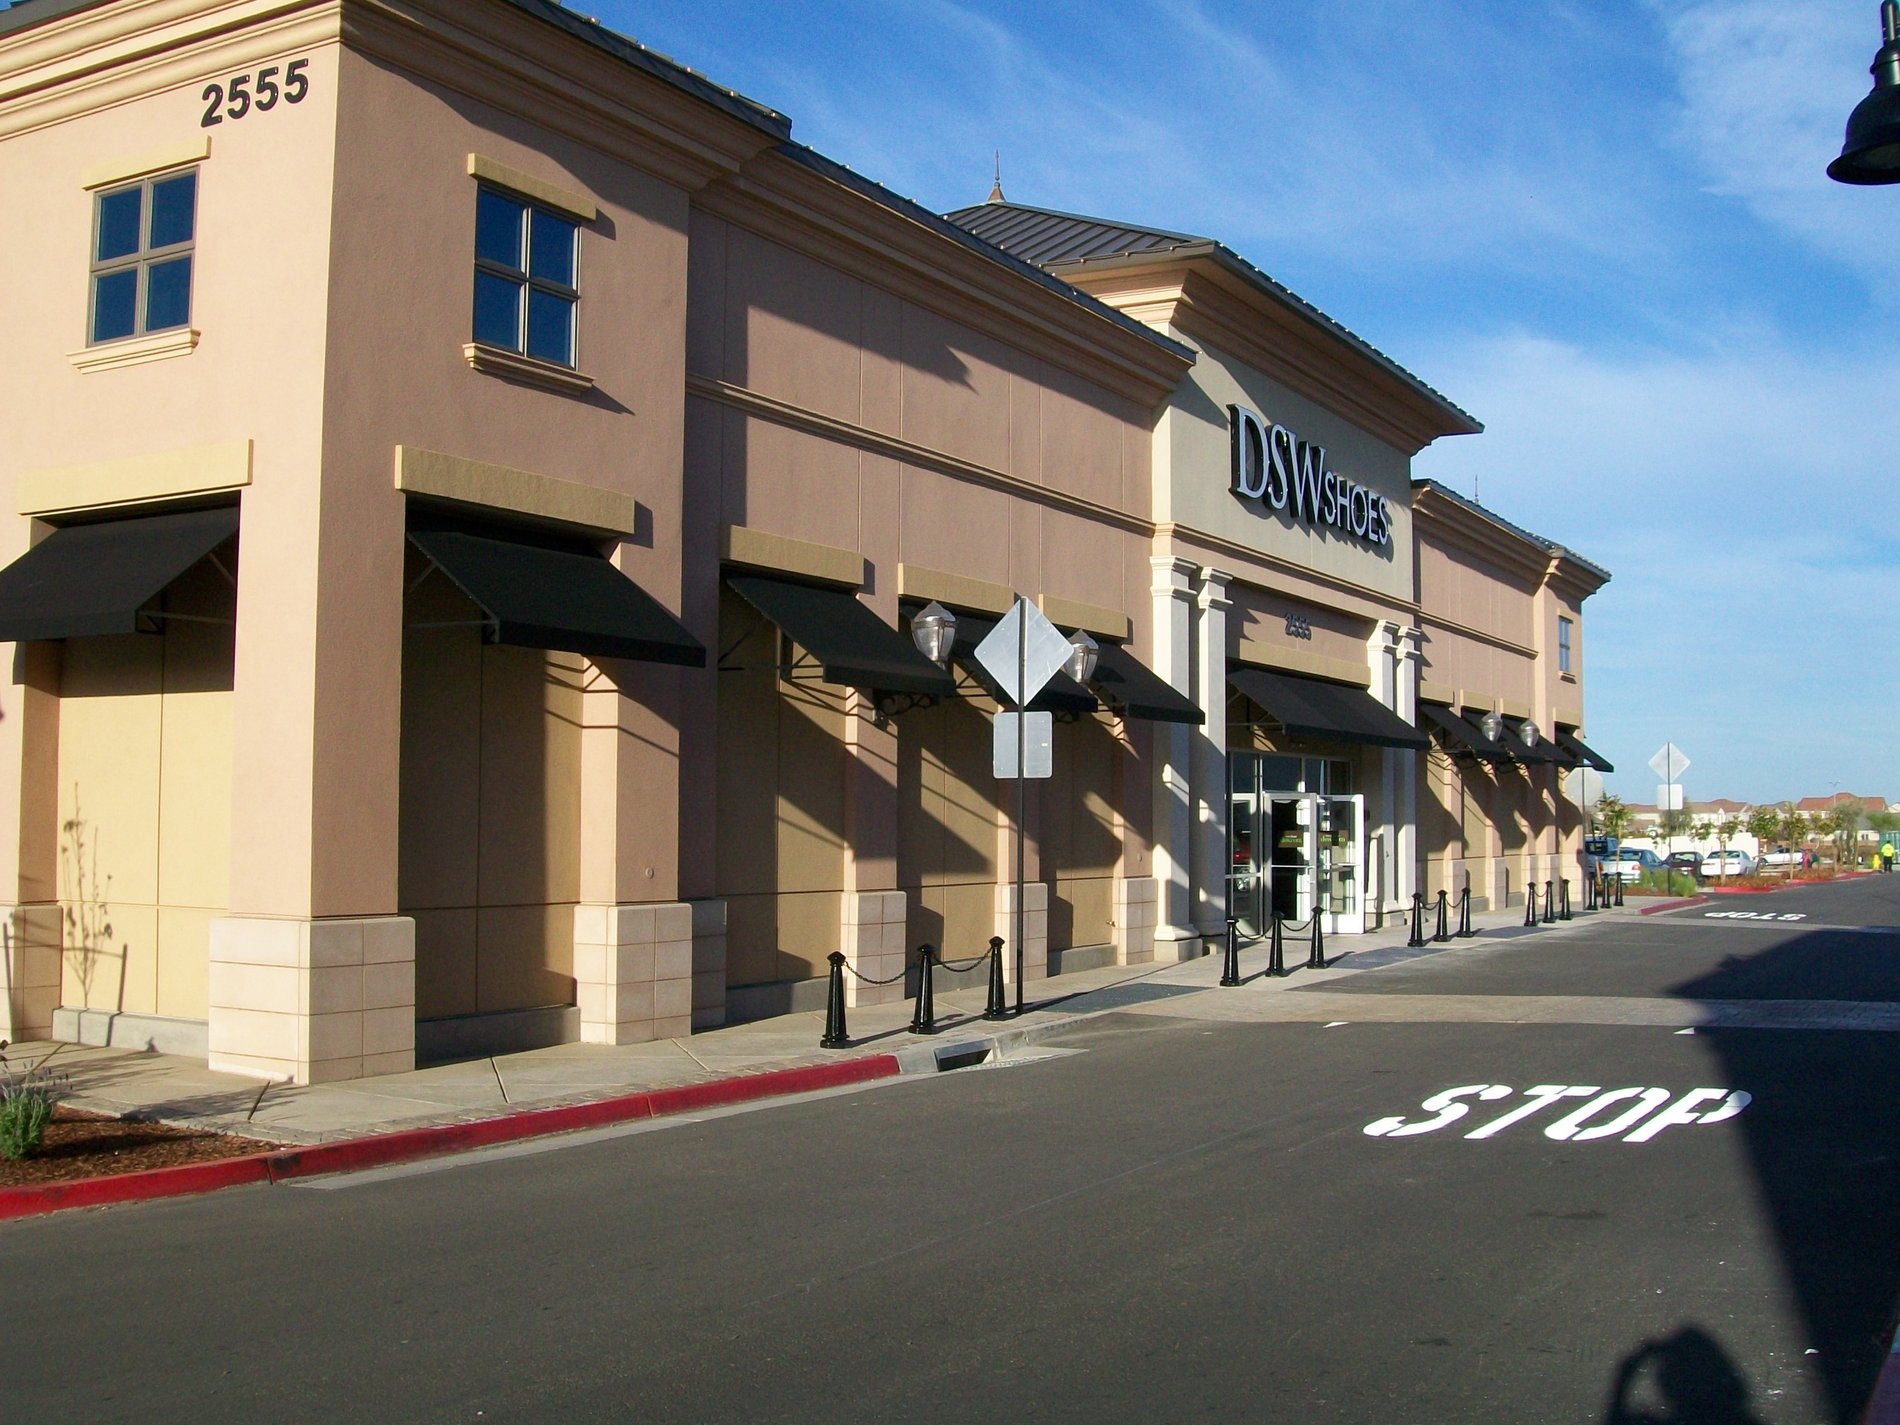 DSW Women's and Men's Shoe Store in Brentwood, CA